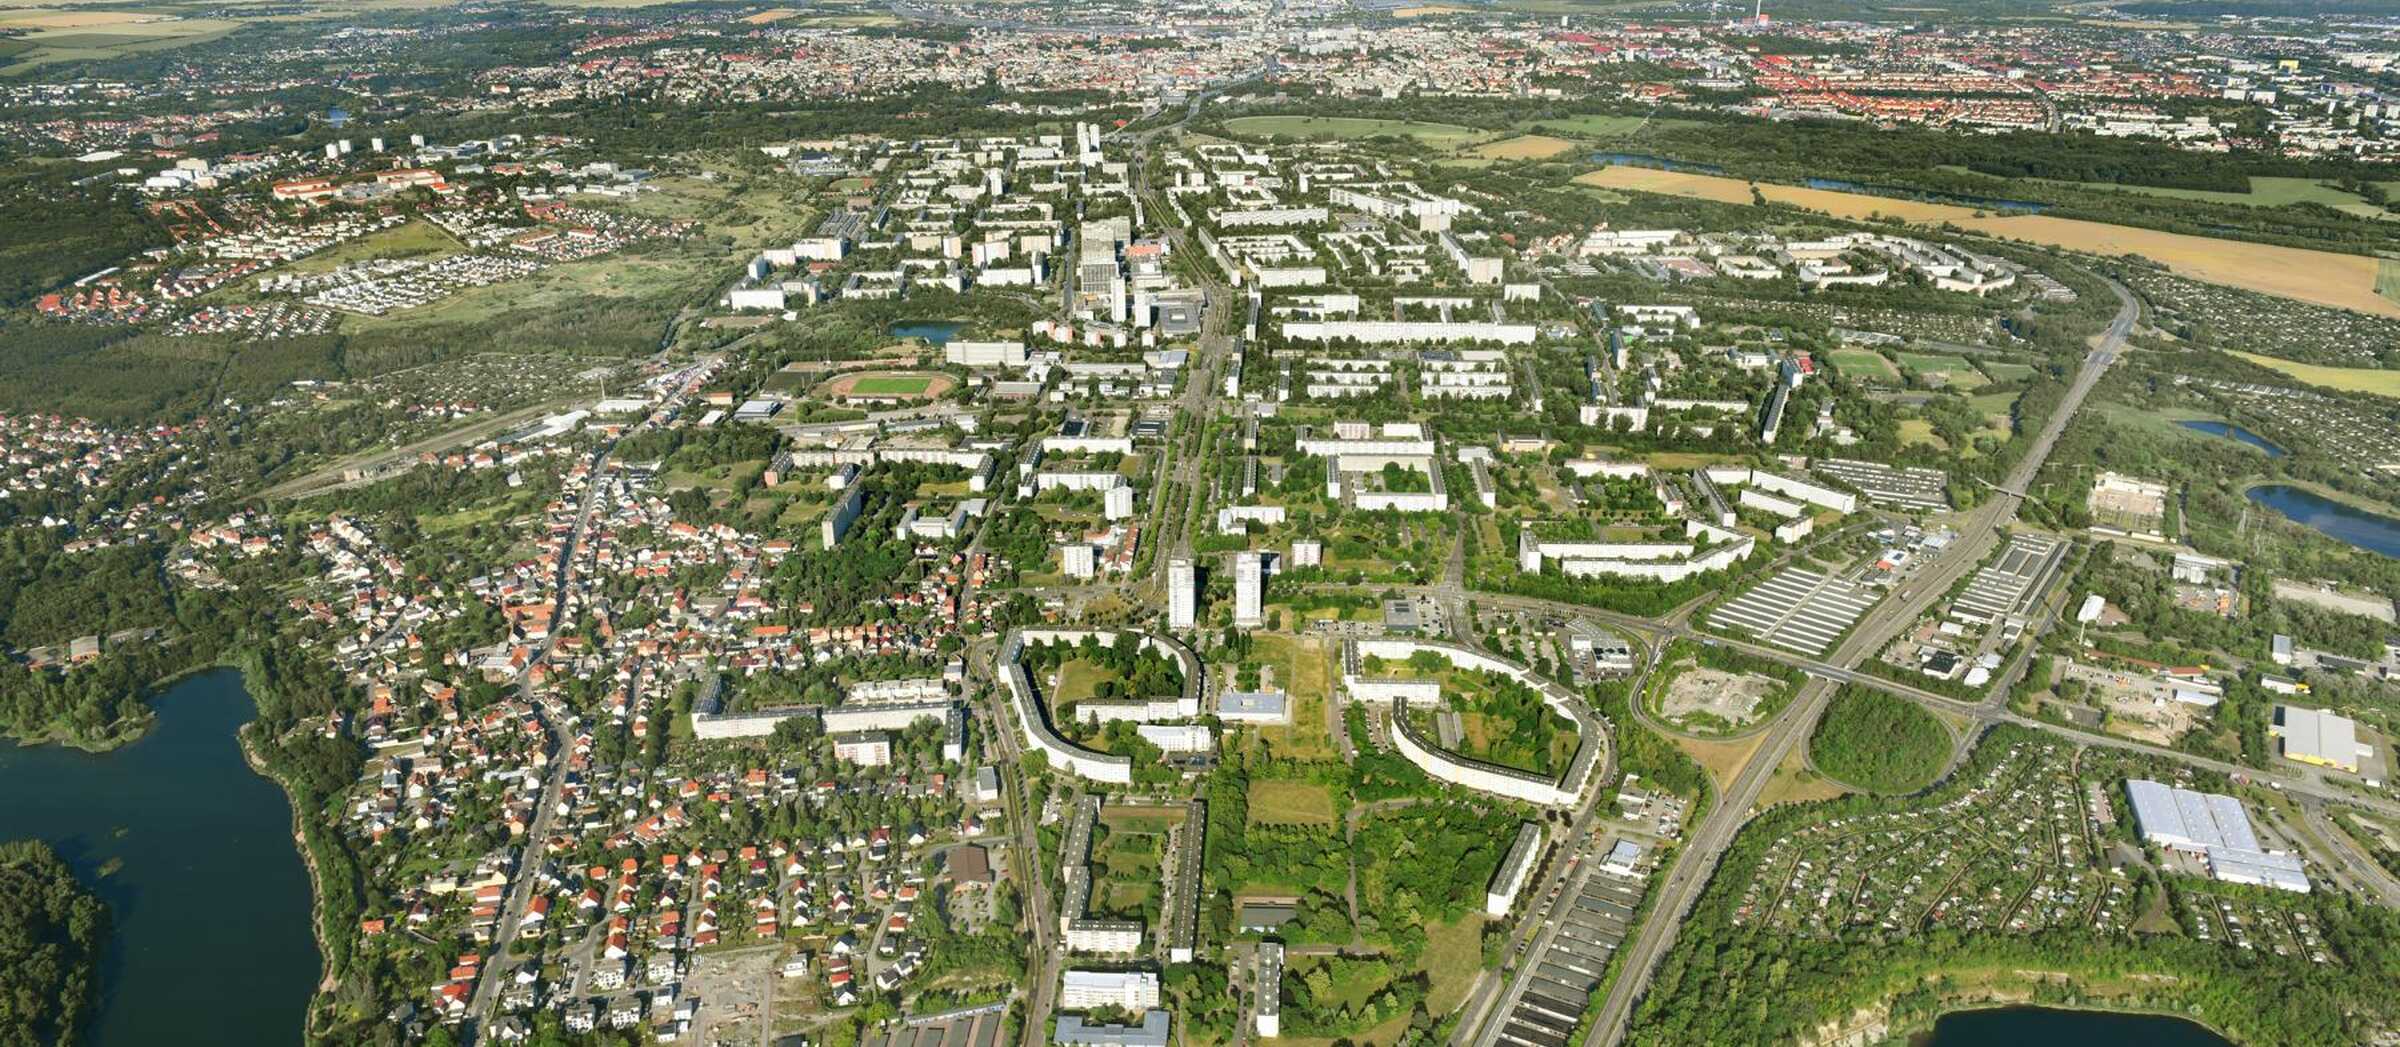 Halle-Neustadt